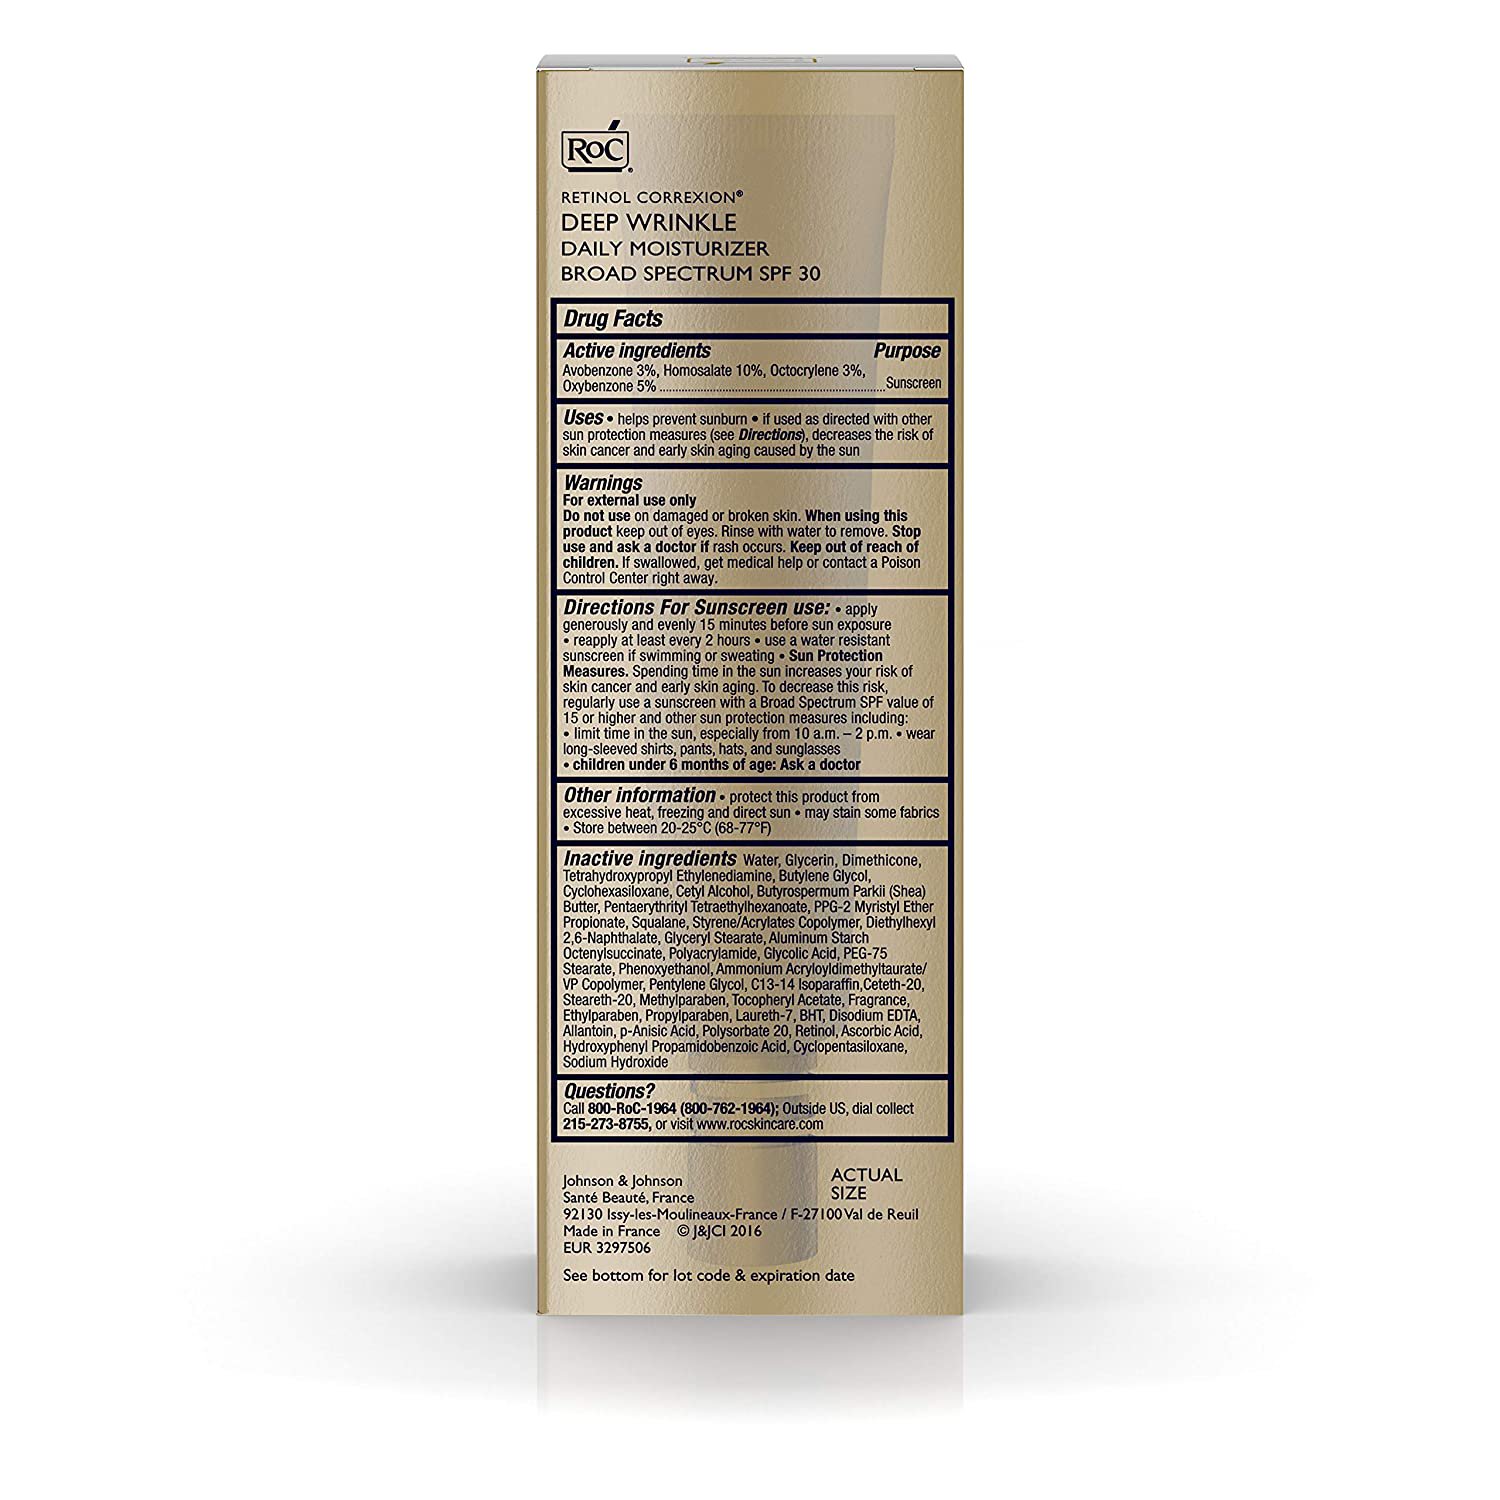 RoC Retinol Correxion Deep Wrinkle Daily Moisturizer Cream, SPF 30, 1 fl oz - image 2 of 2